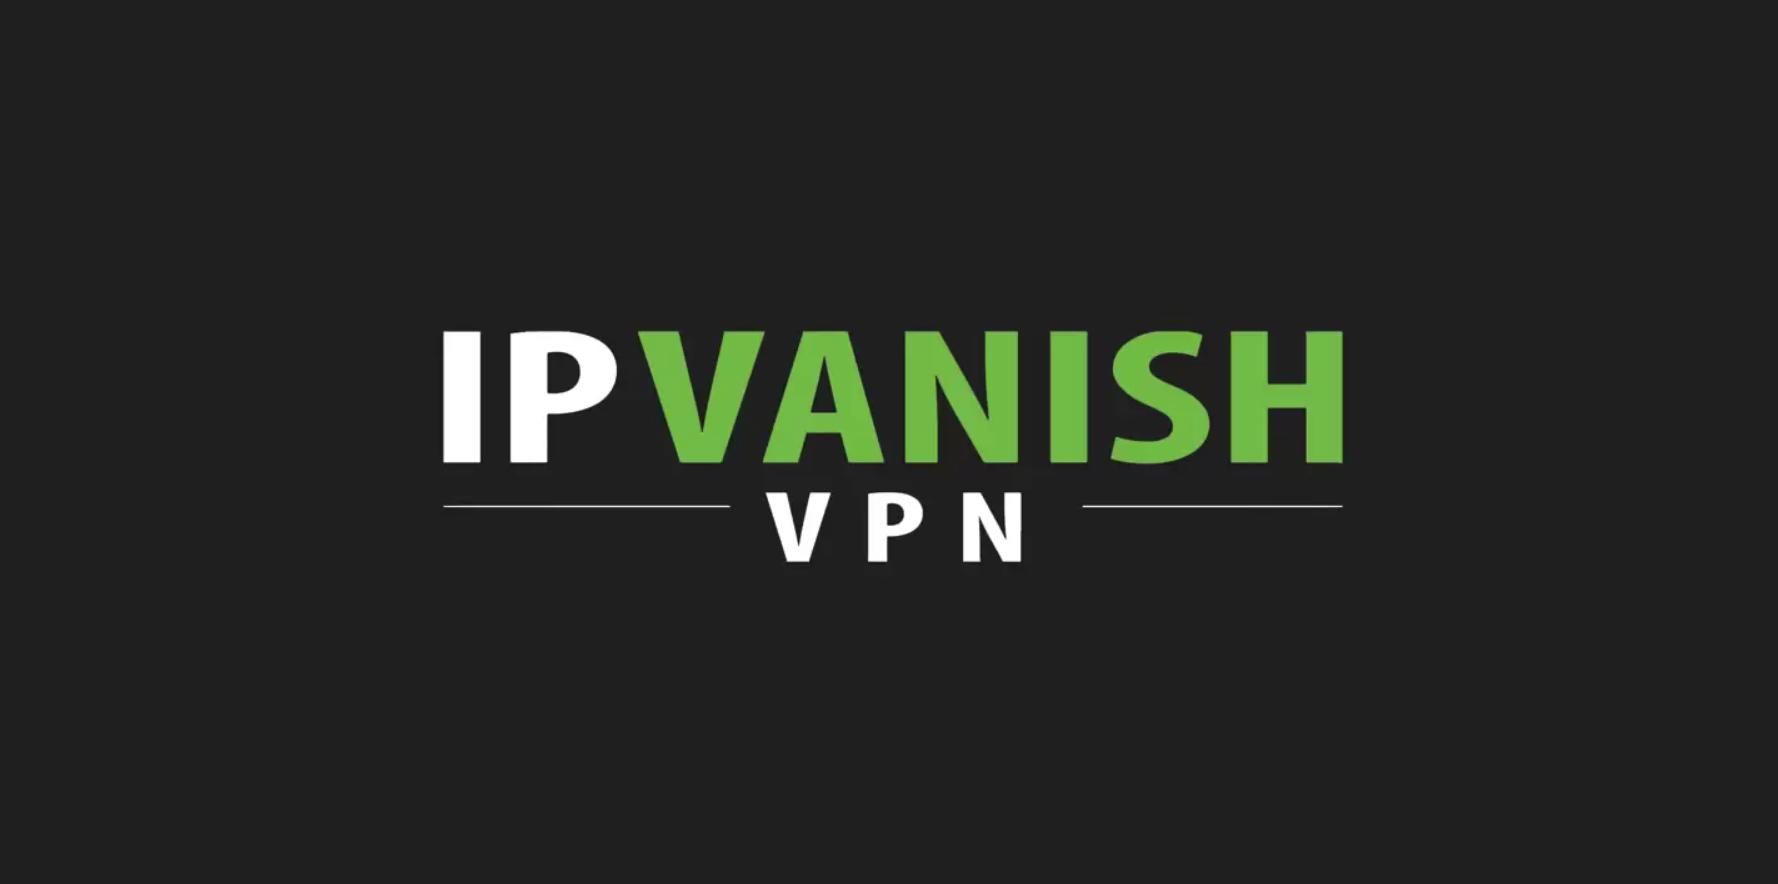 IPVANISH VPN. Playerok реклама. IP Vanish.